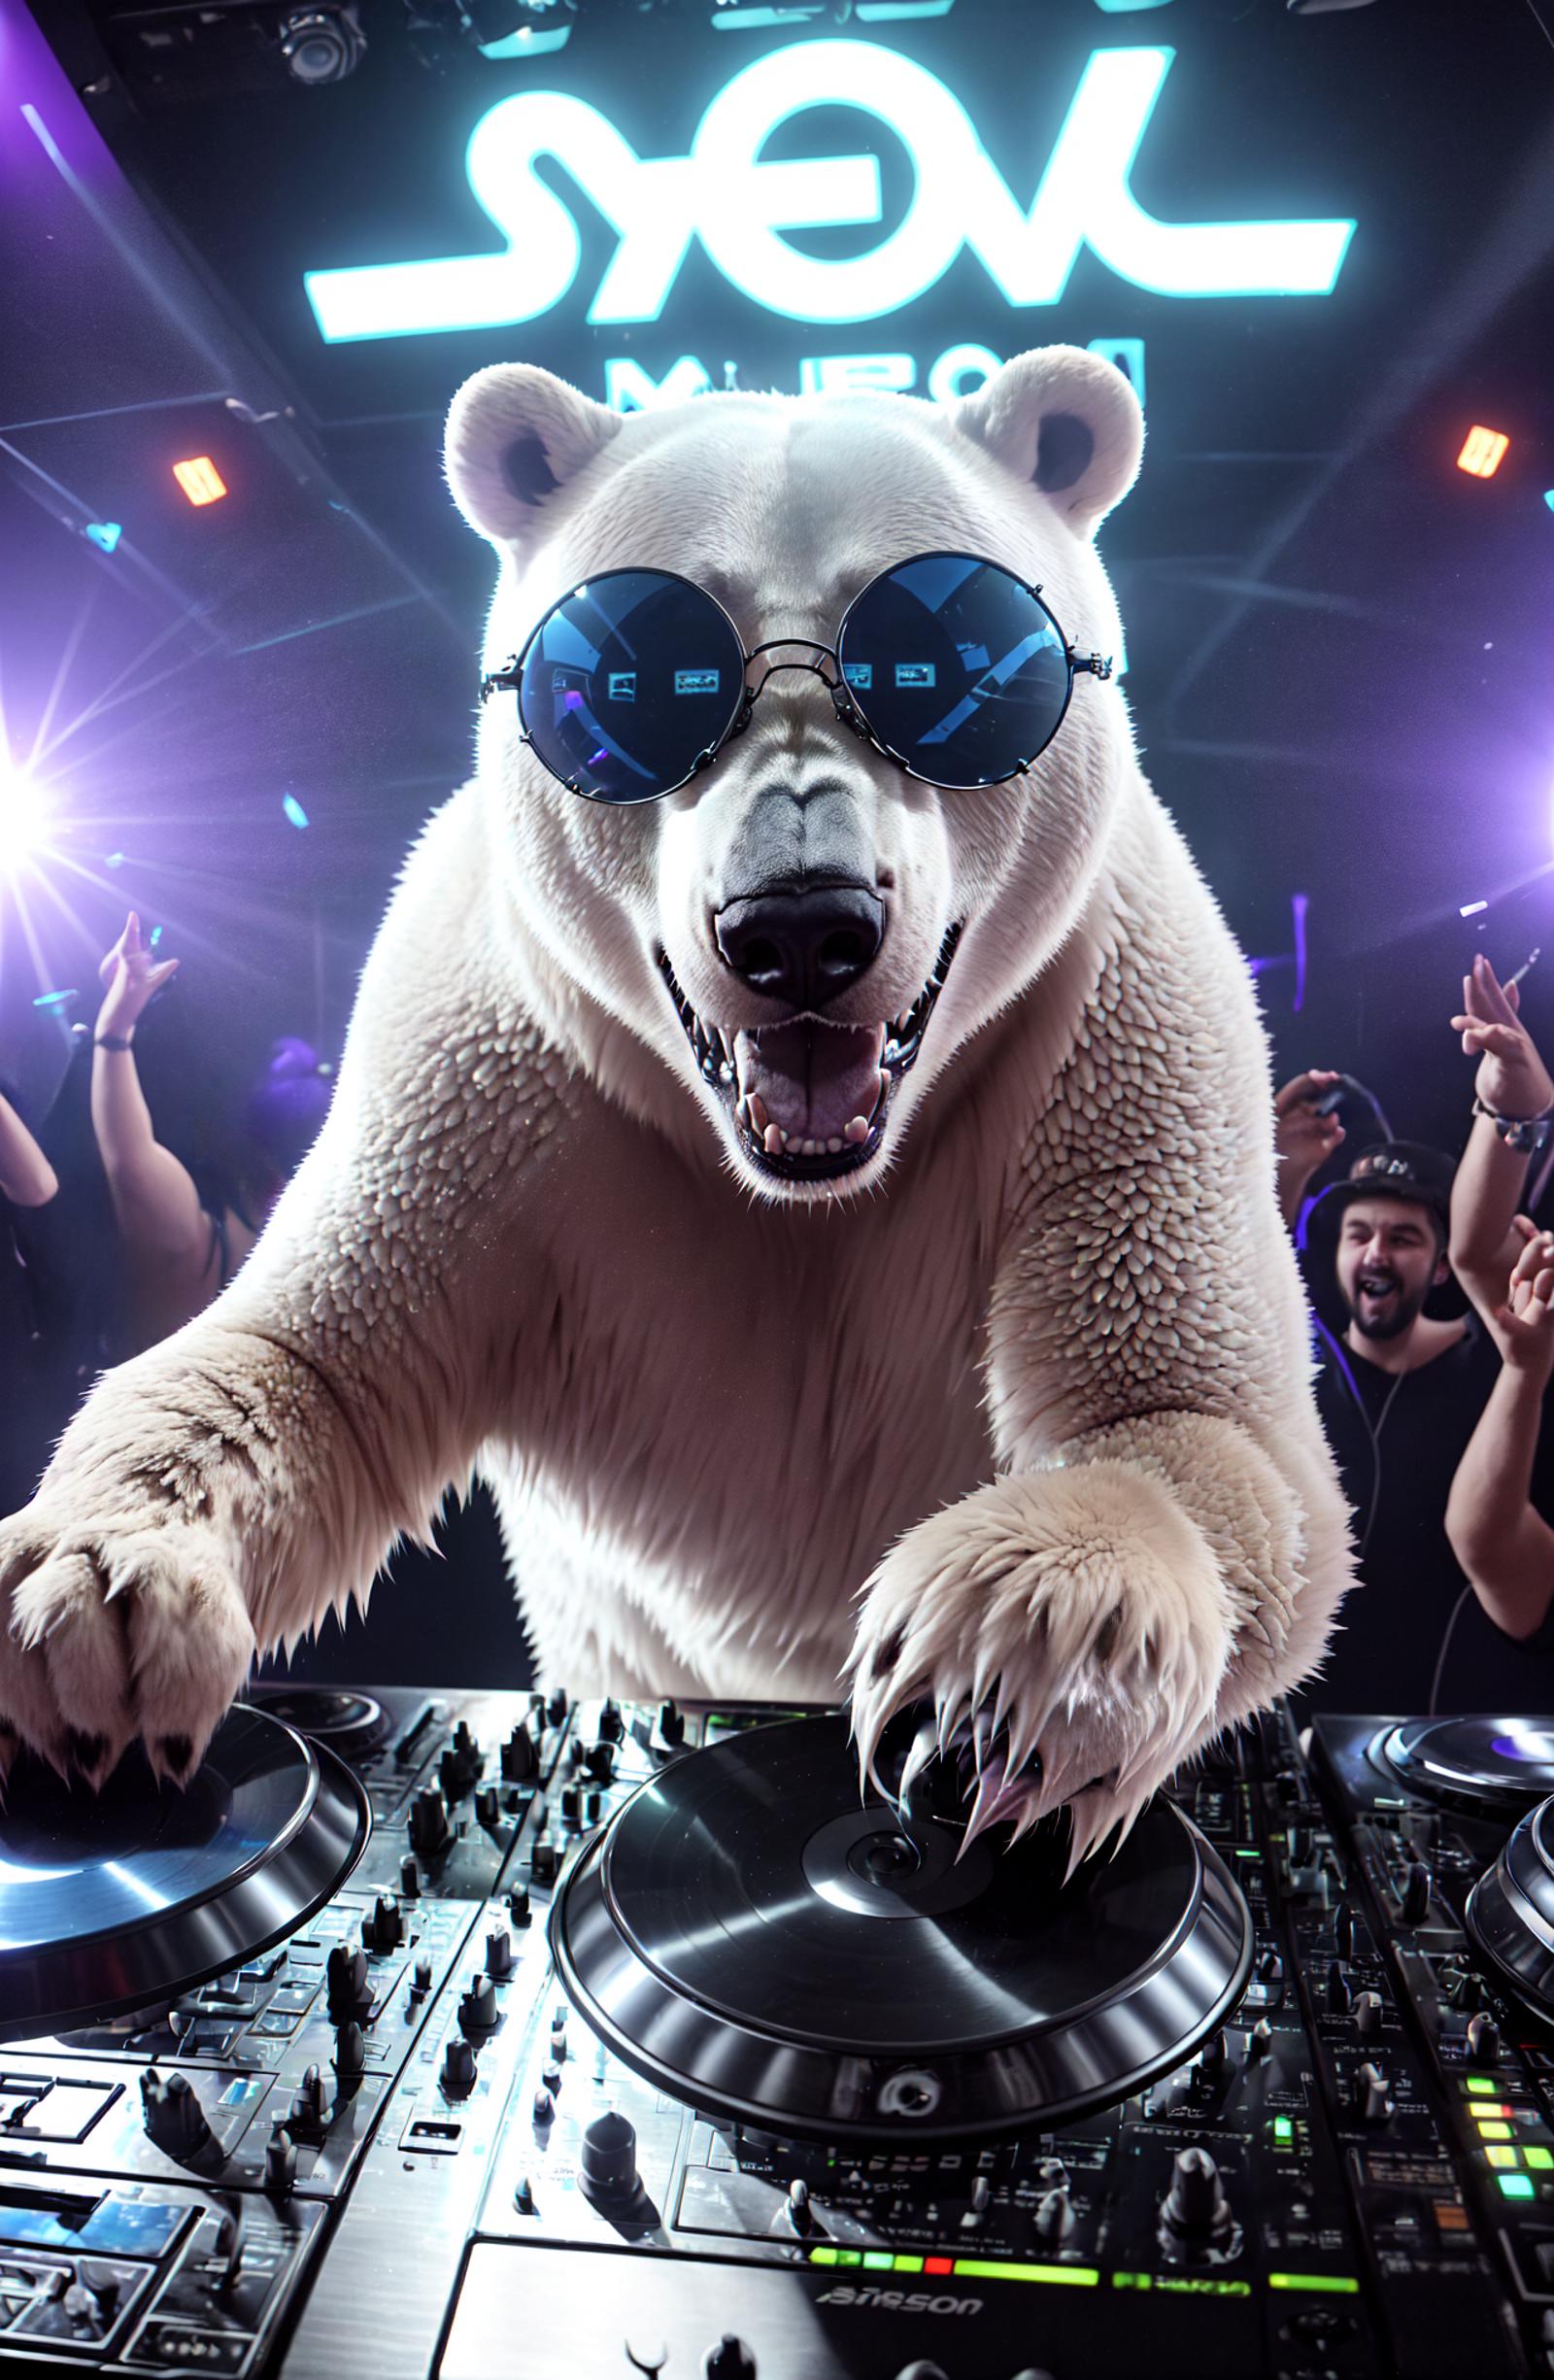 DJ Polar Bear: A White Bear Behind Turntables and Mixers